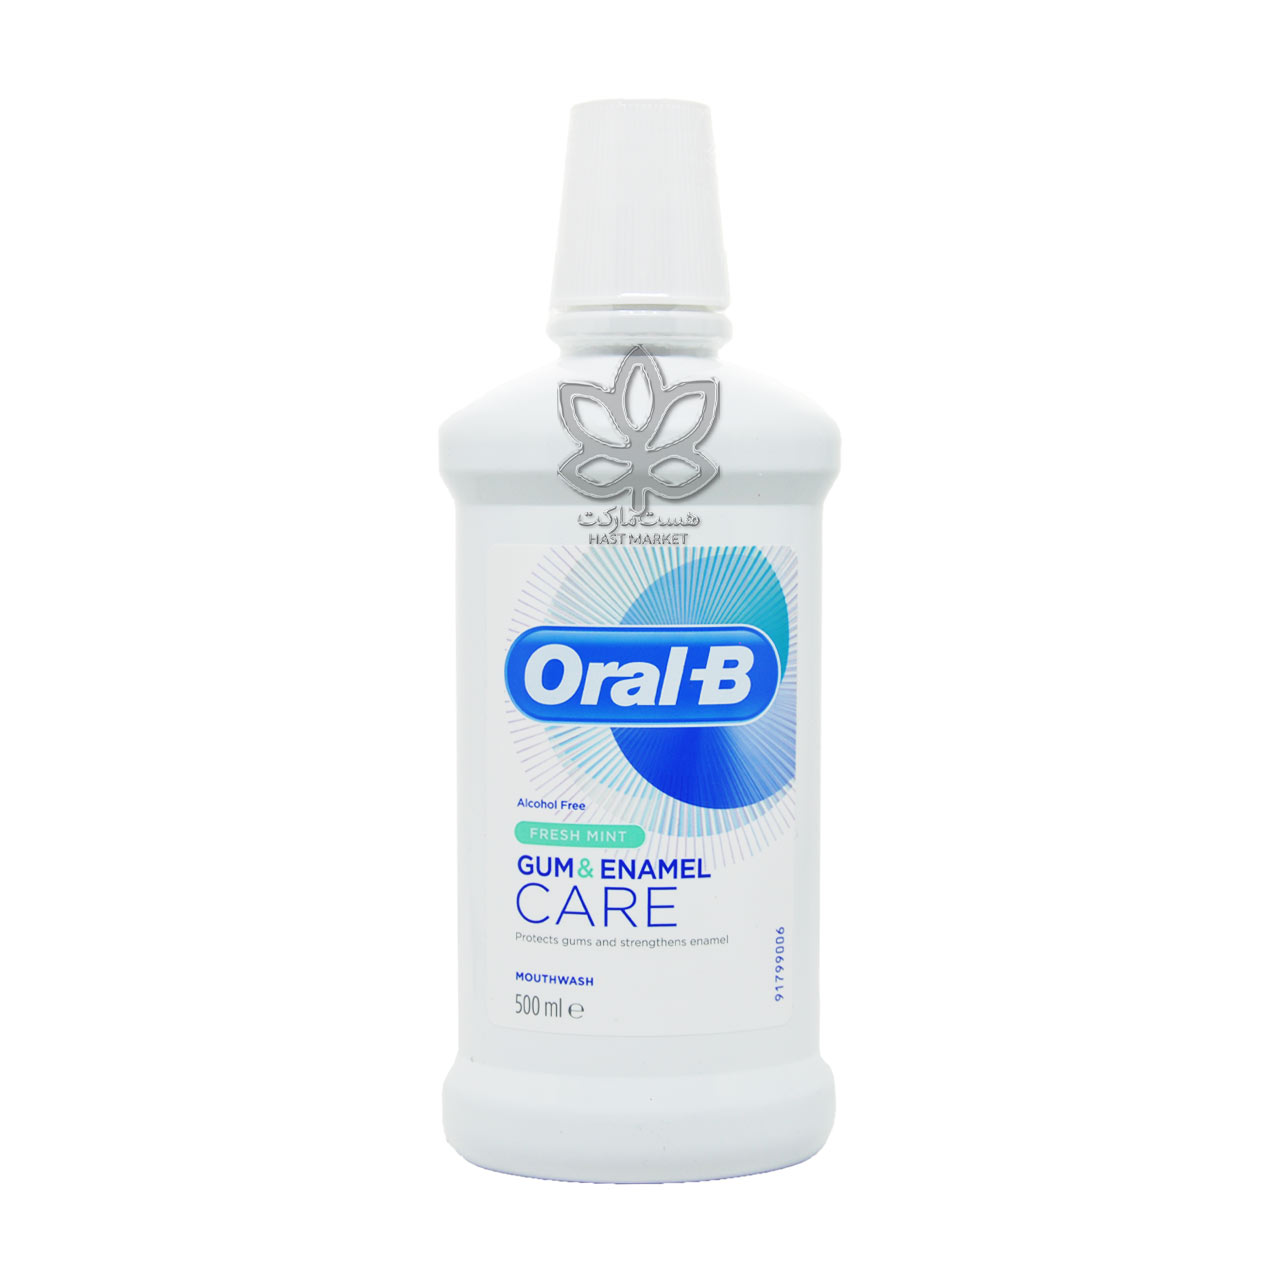 دهانشویه محافظت مینا و لثه فرش مینت ۵۰۰ میل اورال بی - OralB